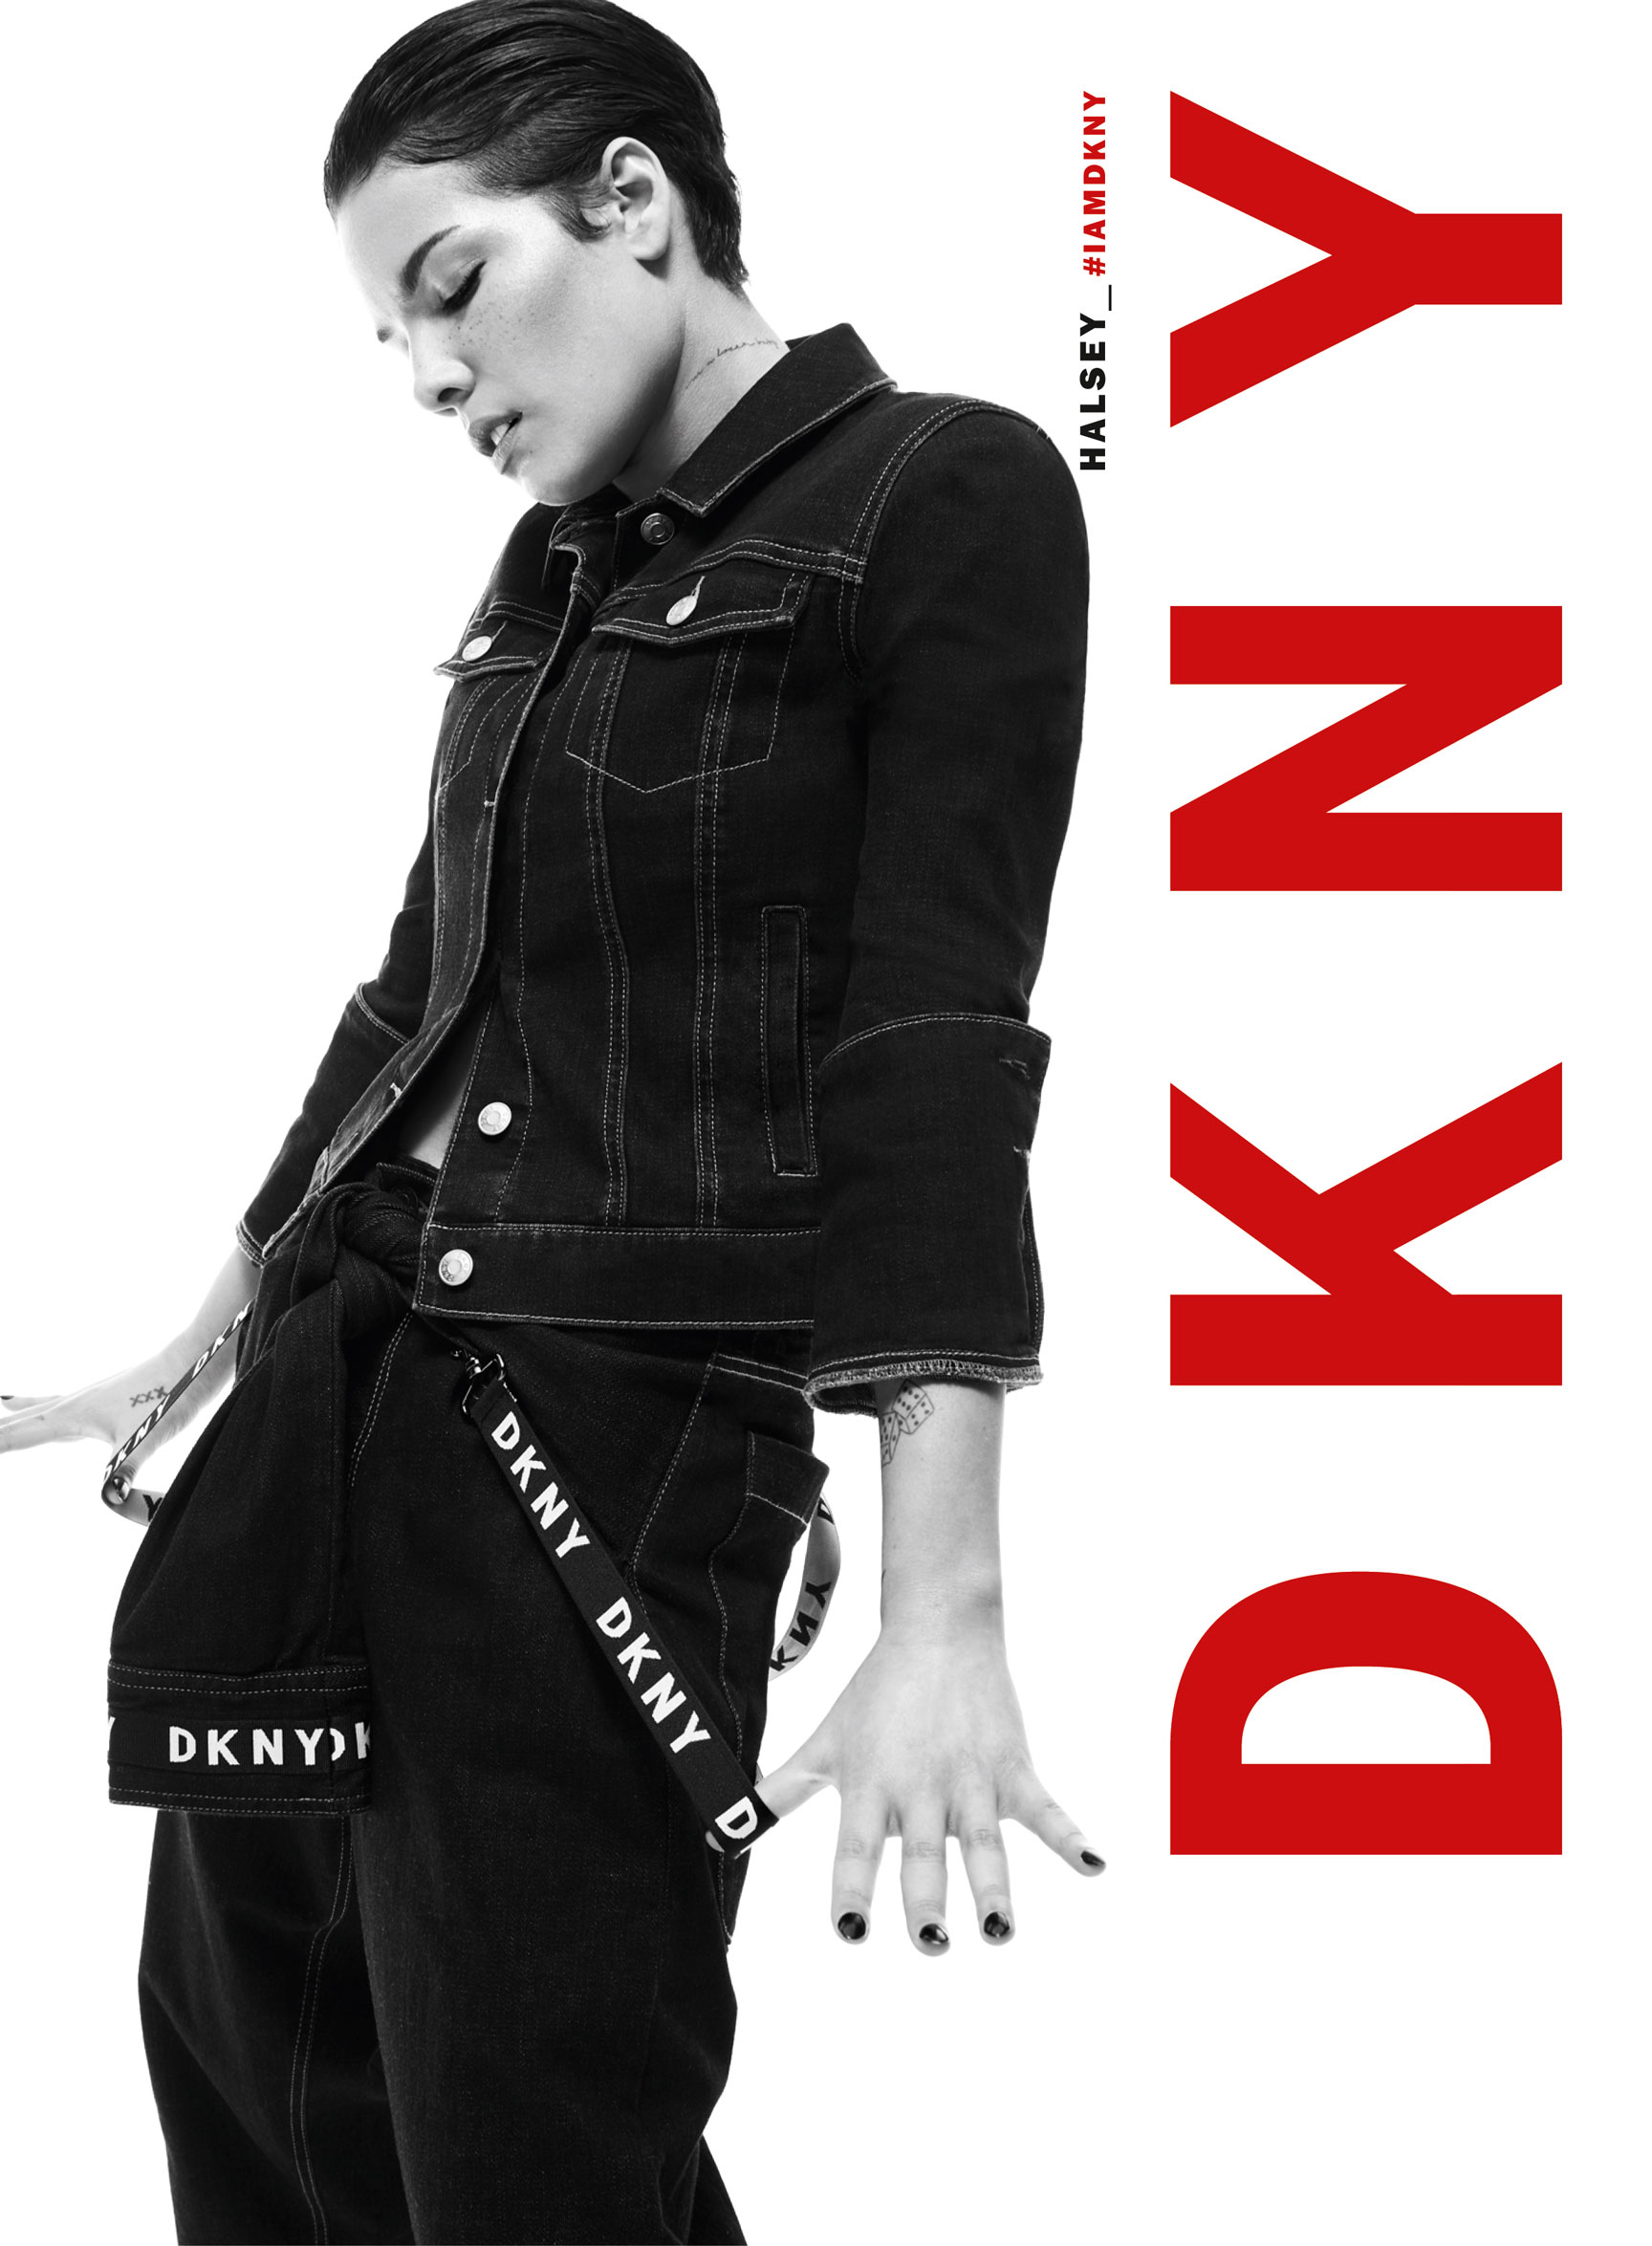 Donna Karan- The Brains Behind DKNY